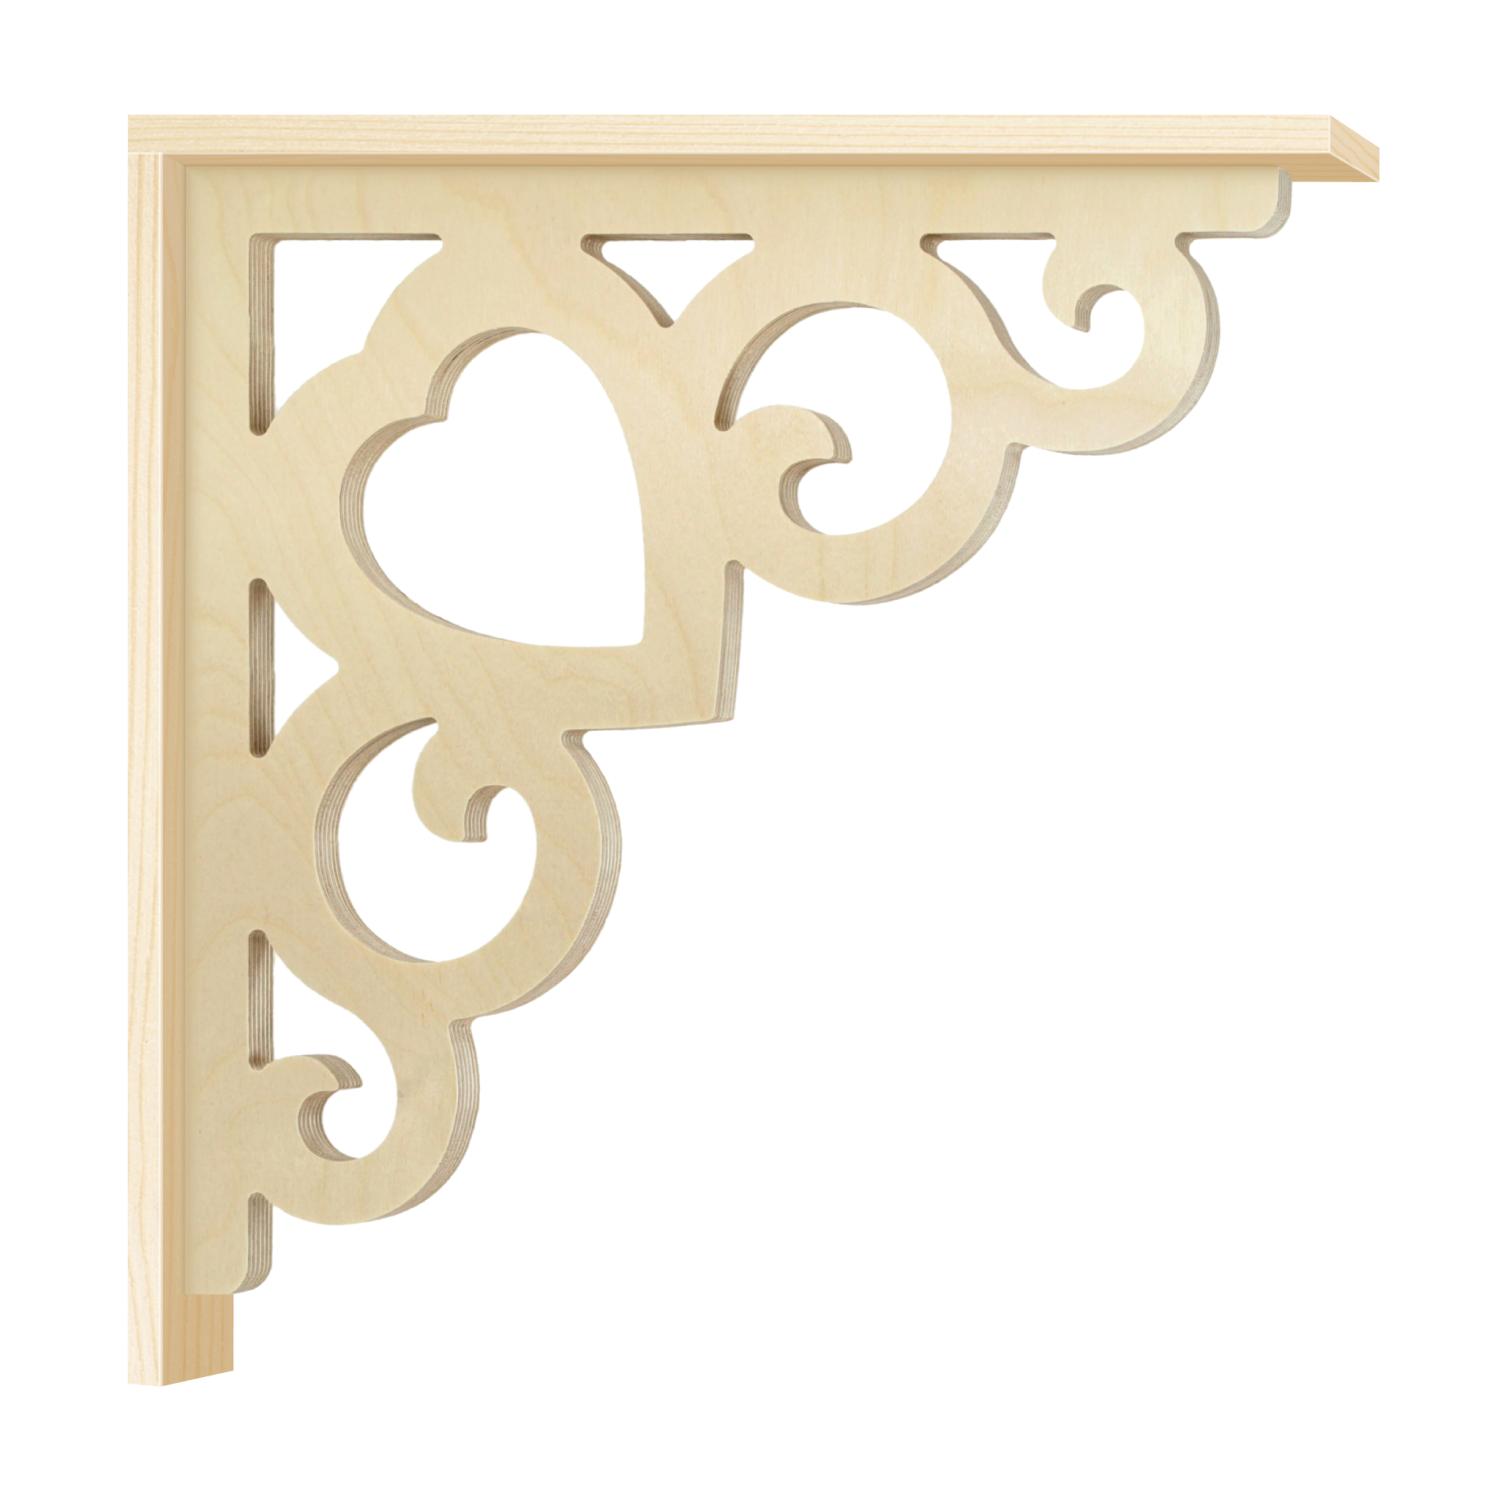 Bracket 002B – Victorian corbel for porch and veranda with decorative wooden strip